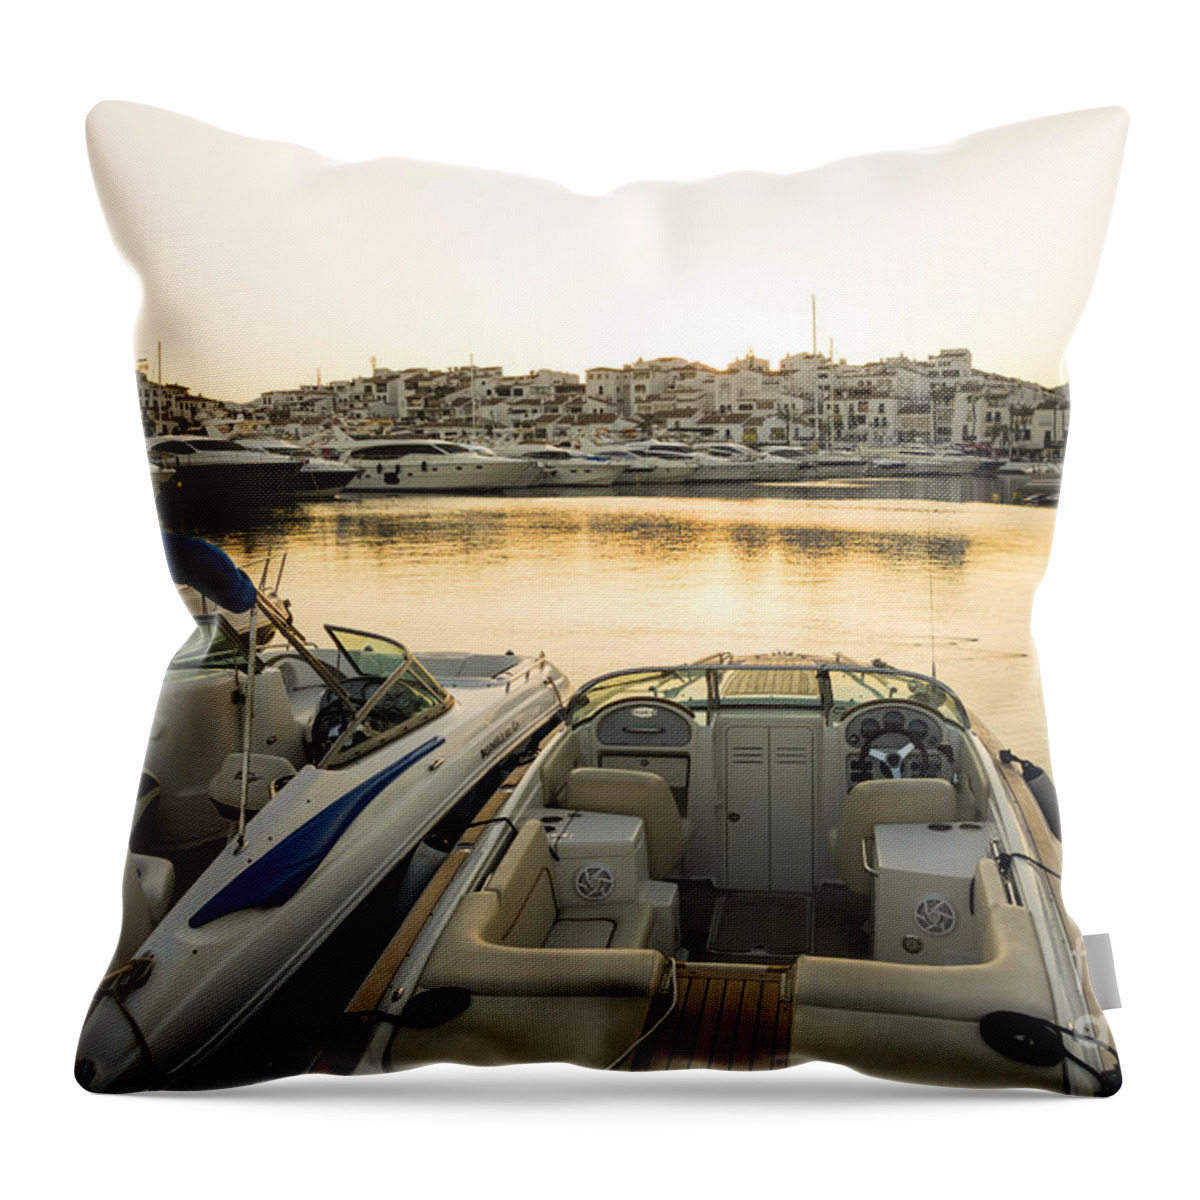 Marbella Throw Pillow featuring the digital art Luxury yachts Puerto banus by Perry Van Munster